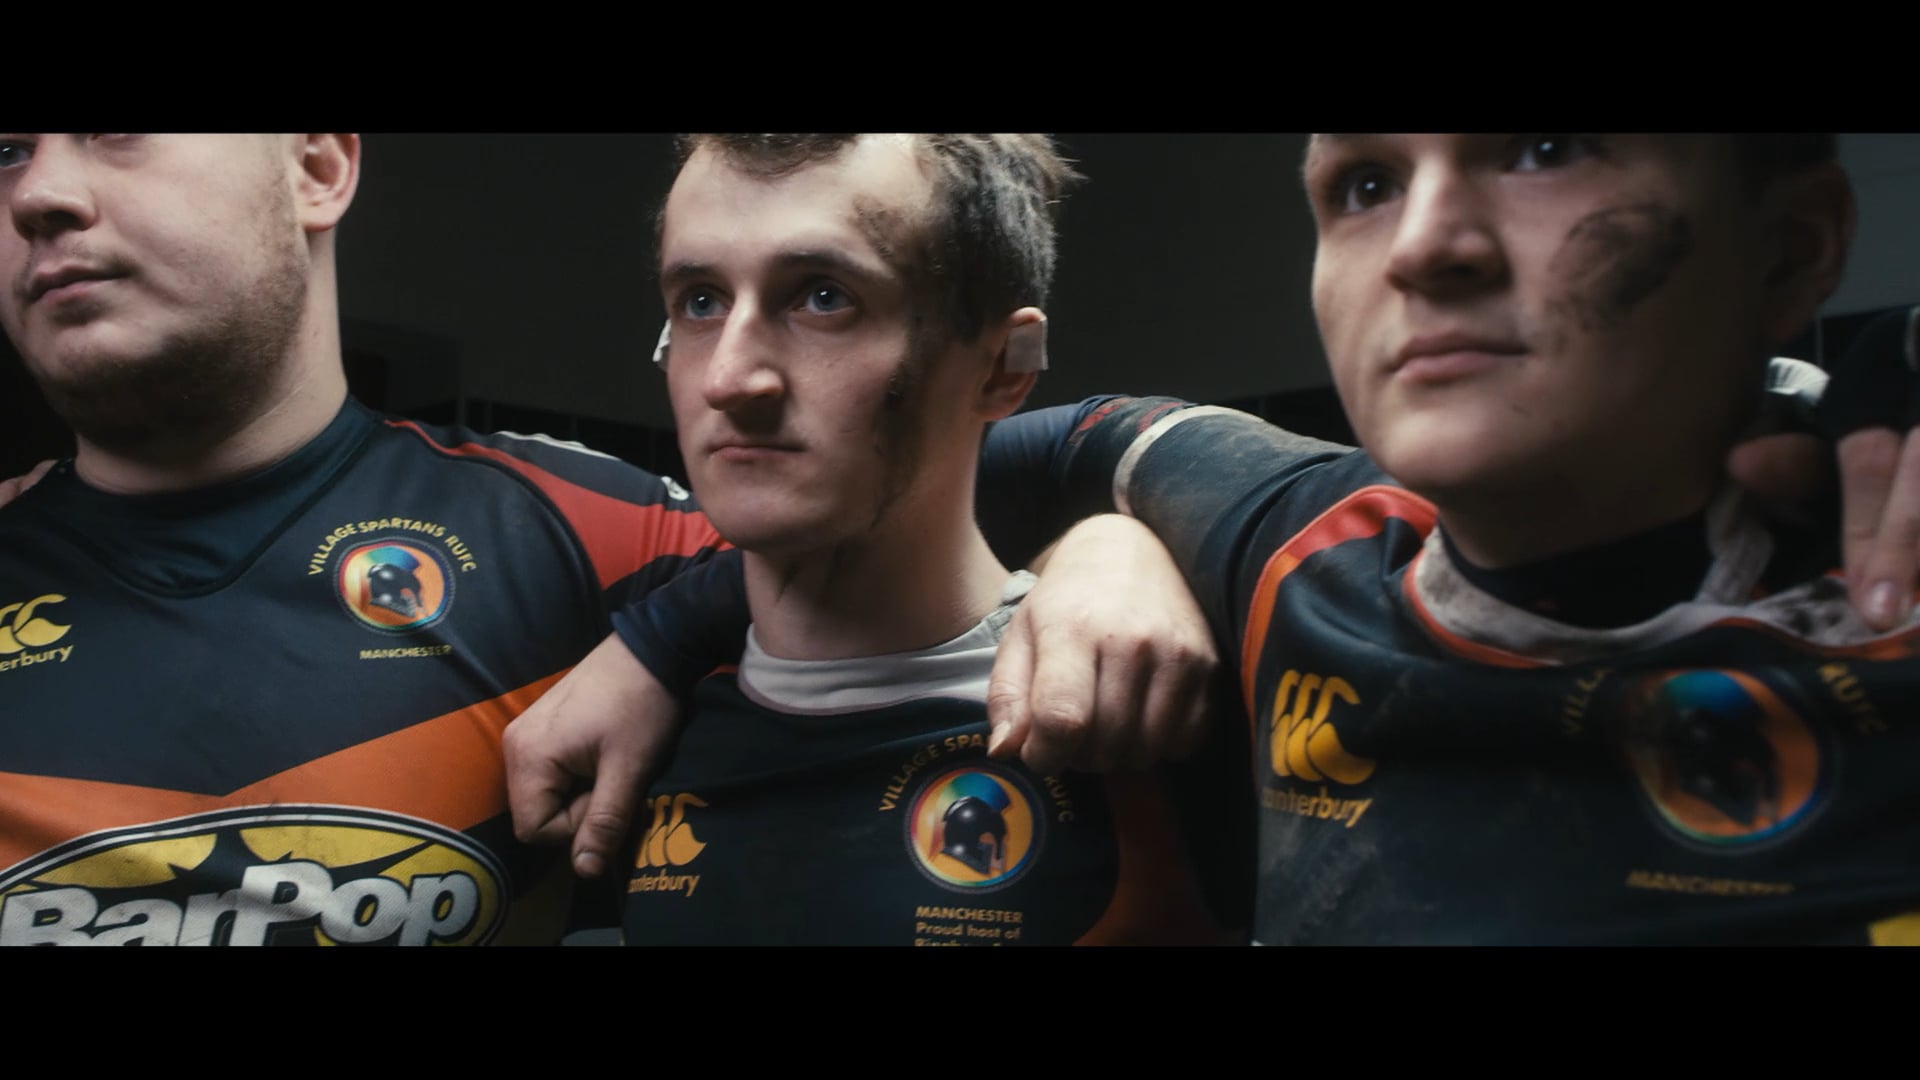 Spirit of Rugby campaign film - Manchester Village Spartans